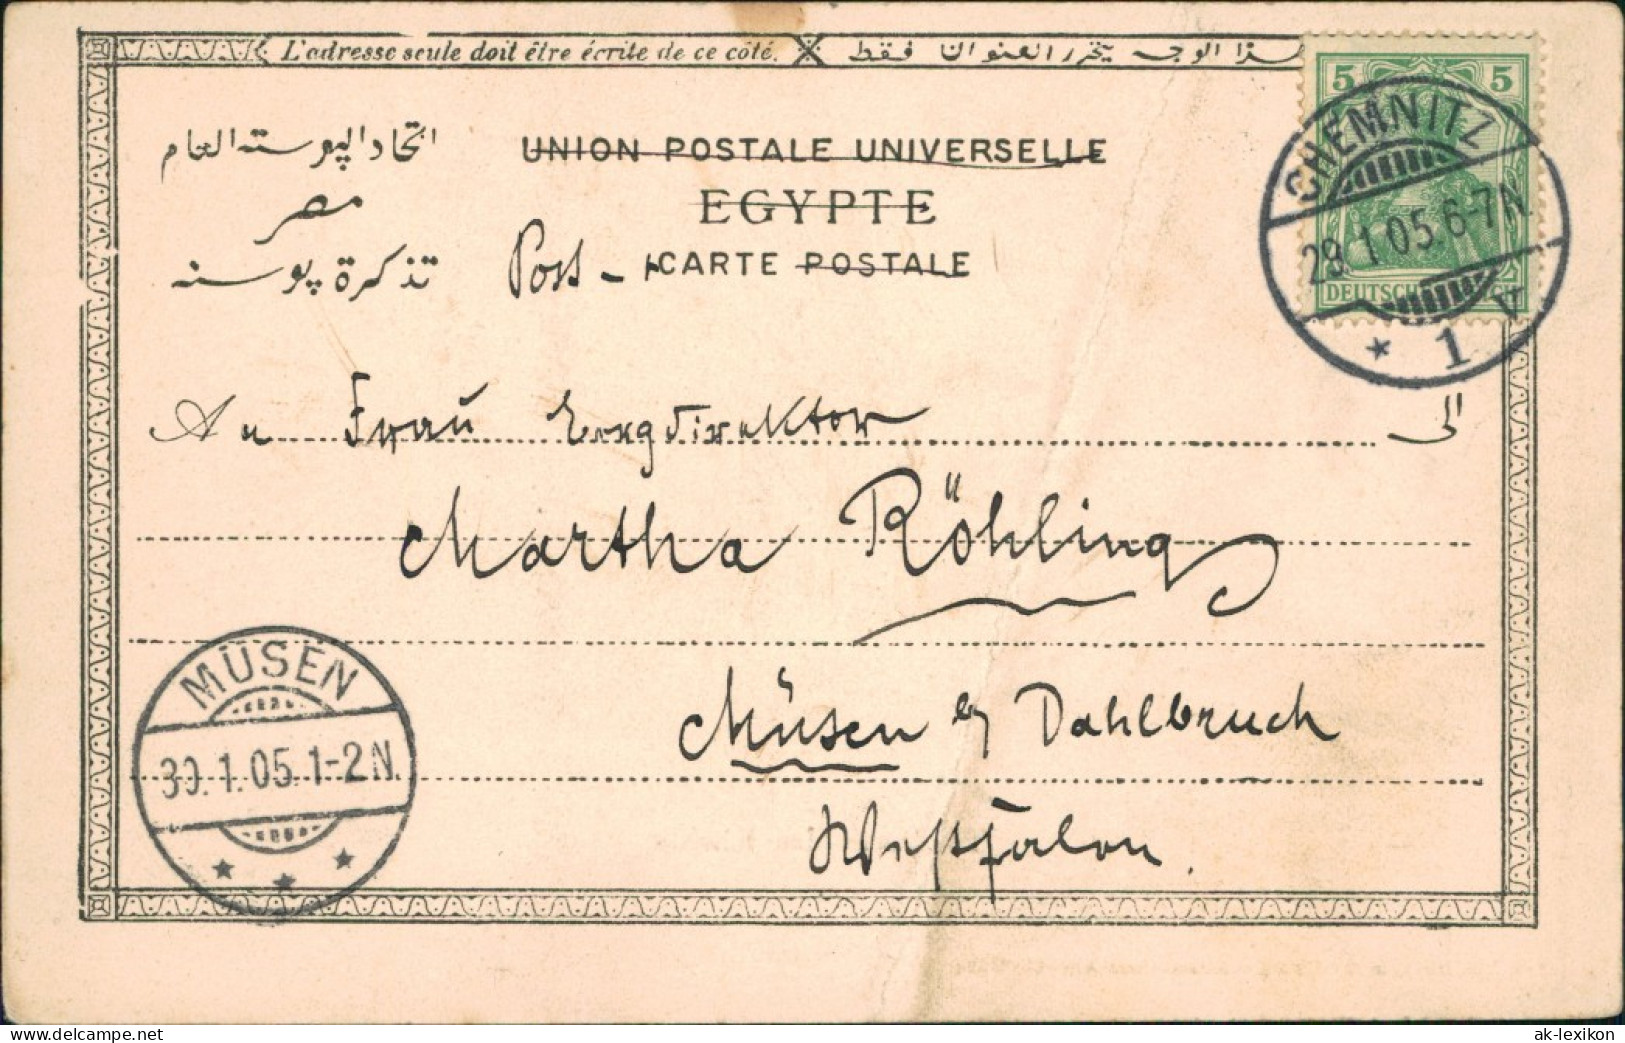 Kairo القاهرة Tombeaux Des Khalifs 1905 - Cairo